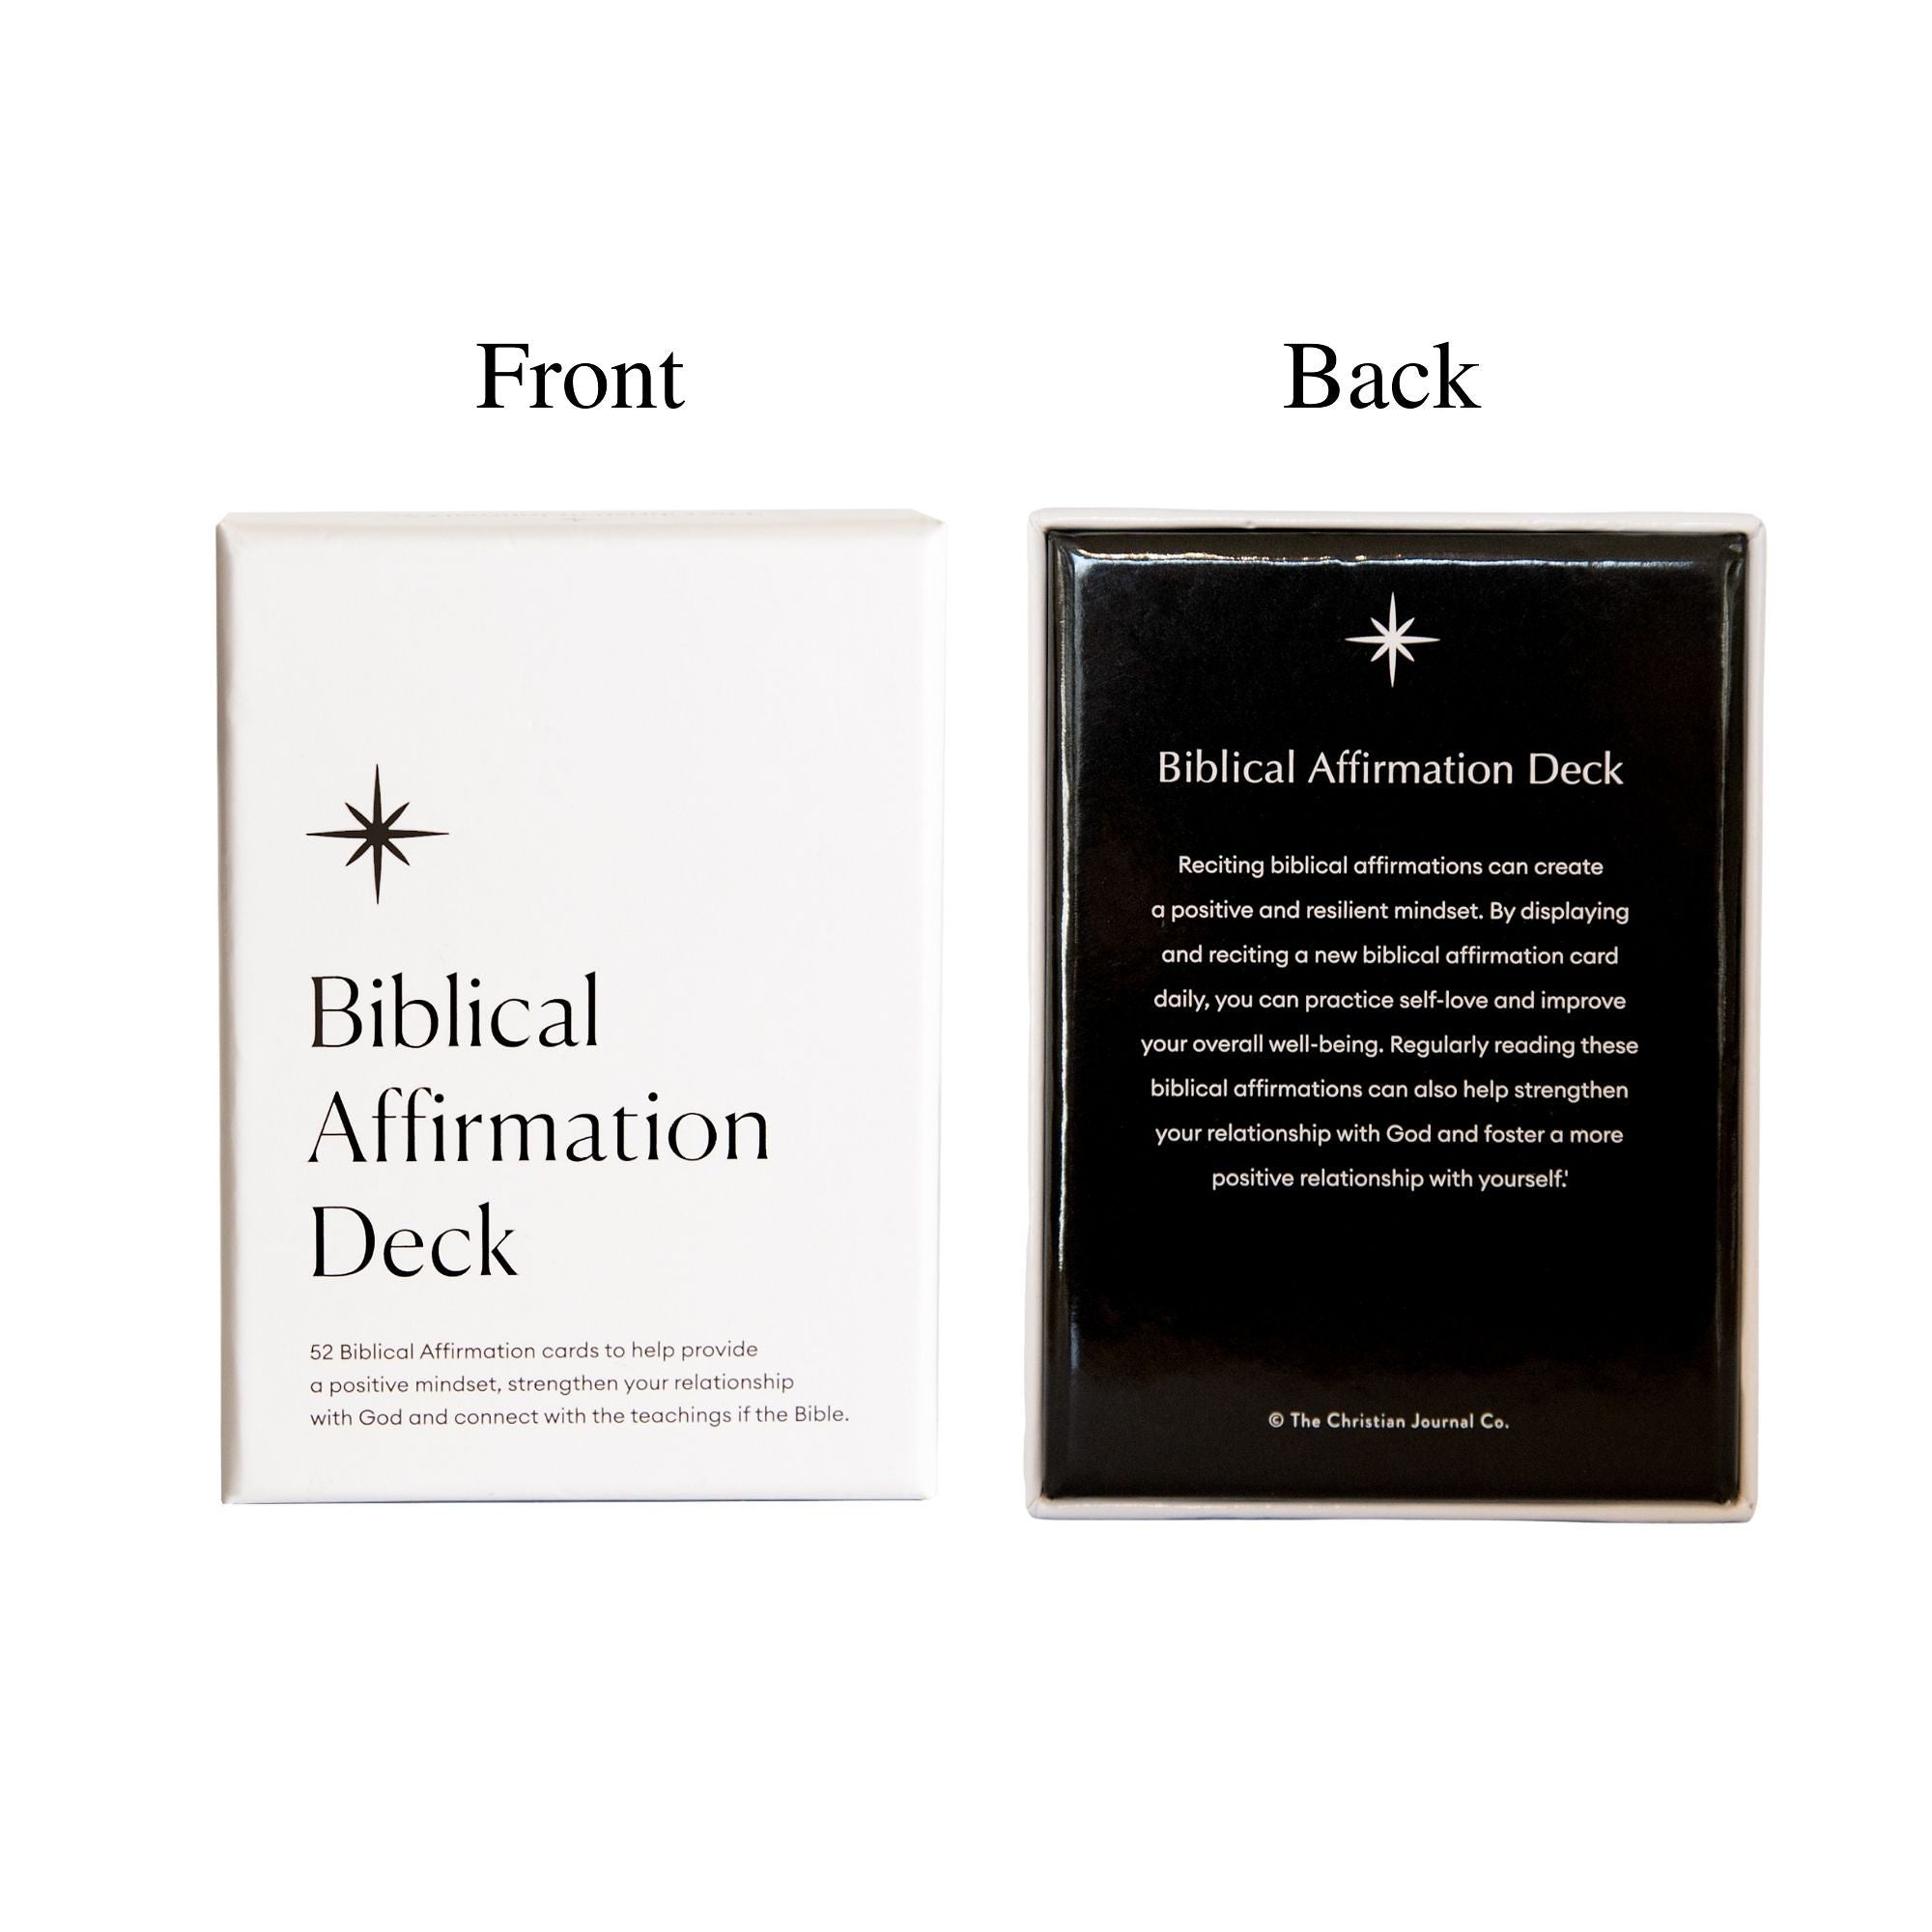 Biblical Affirmation Deck